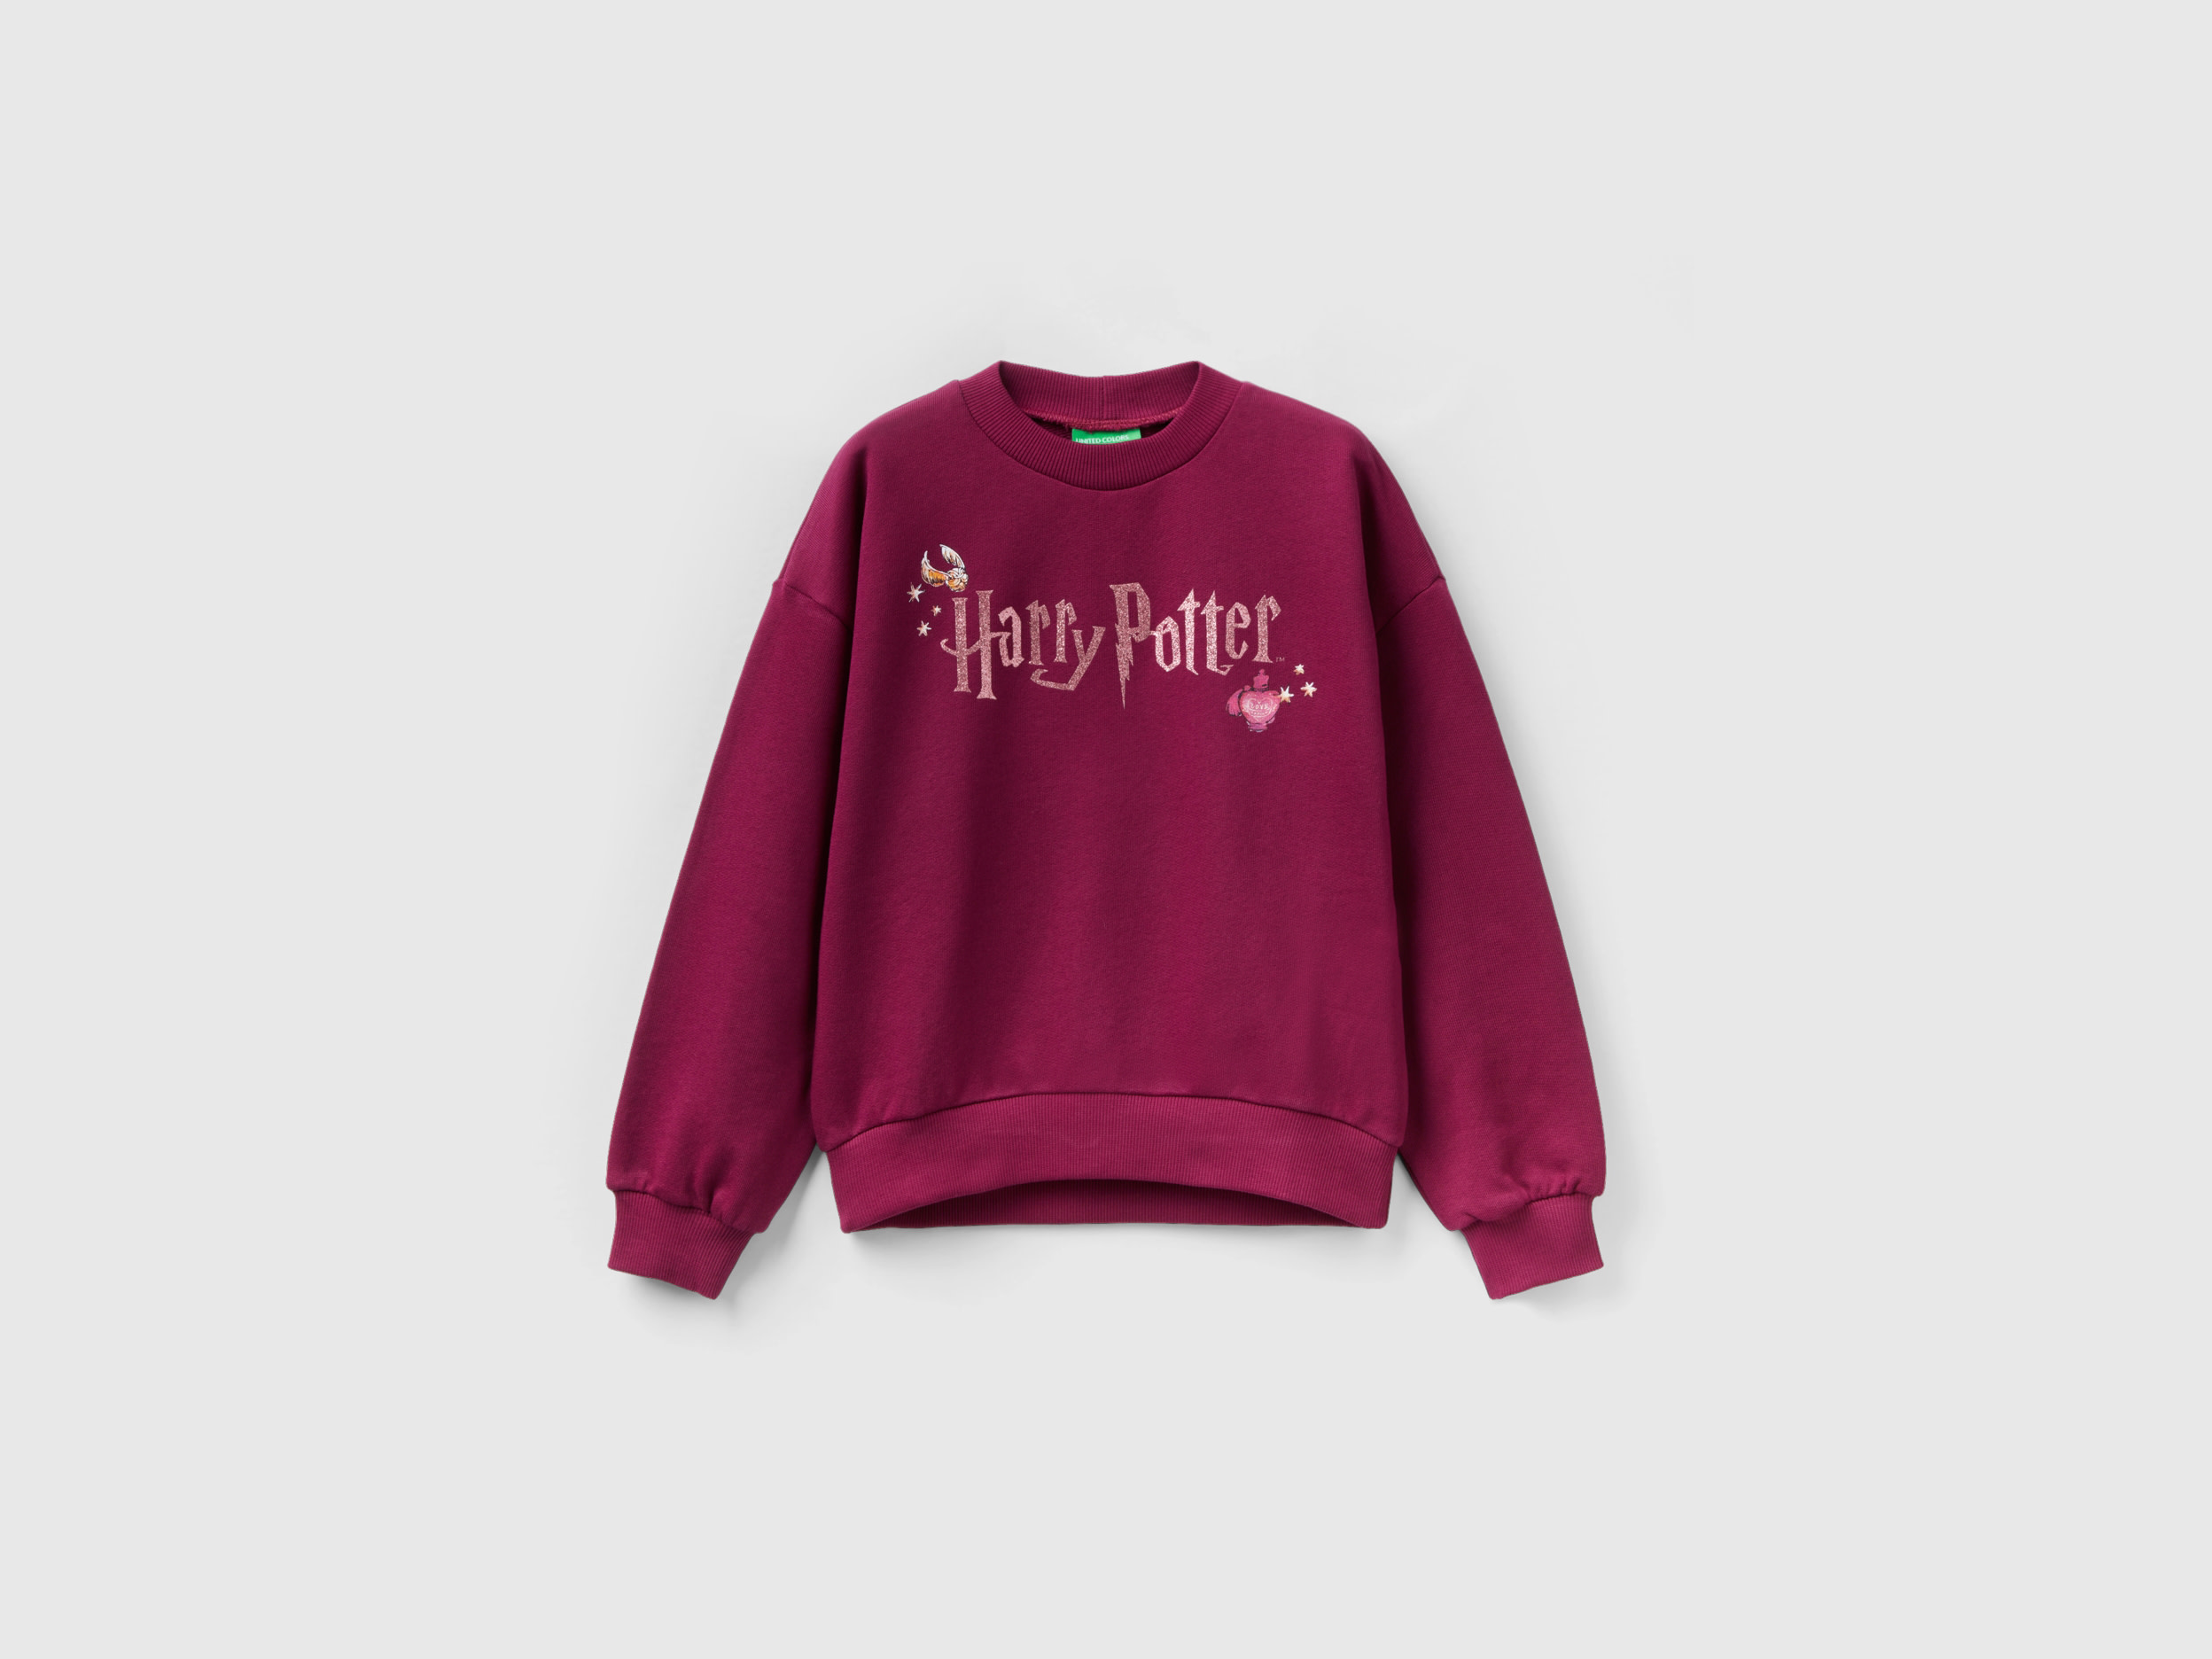 Benetton, Harry Potter Sweatshirt With Glitter, size 2XL, Plum, Kids